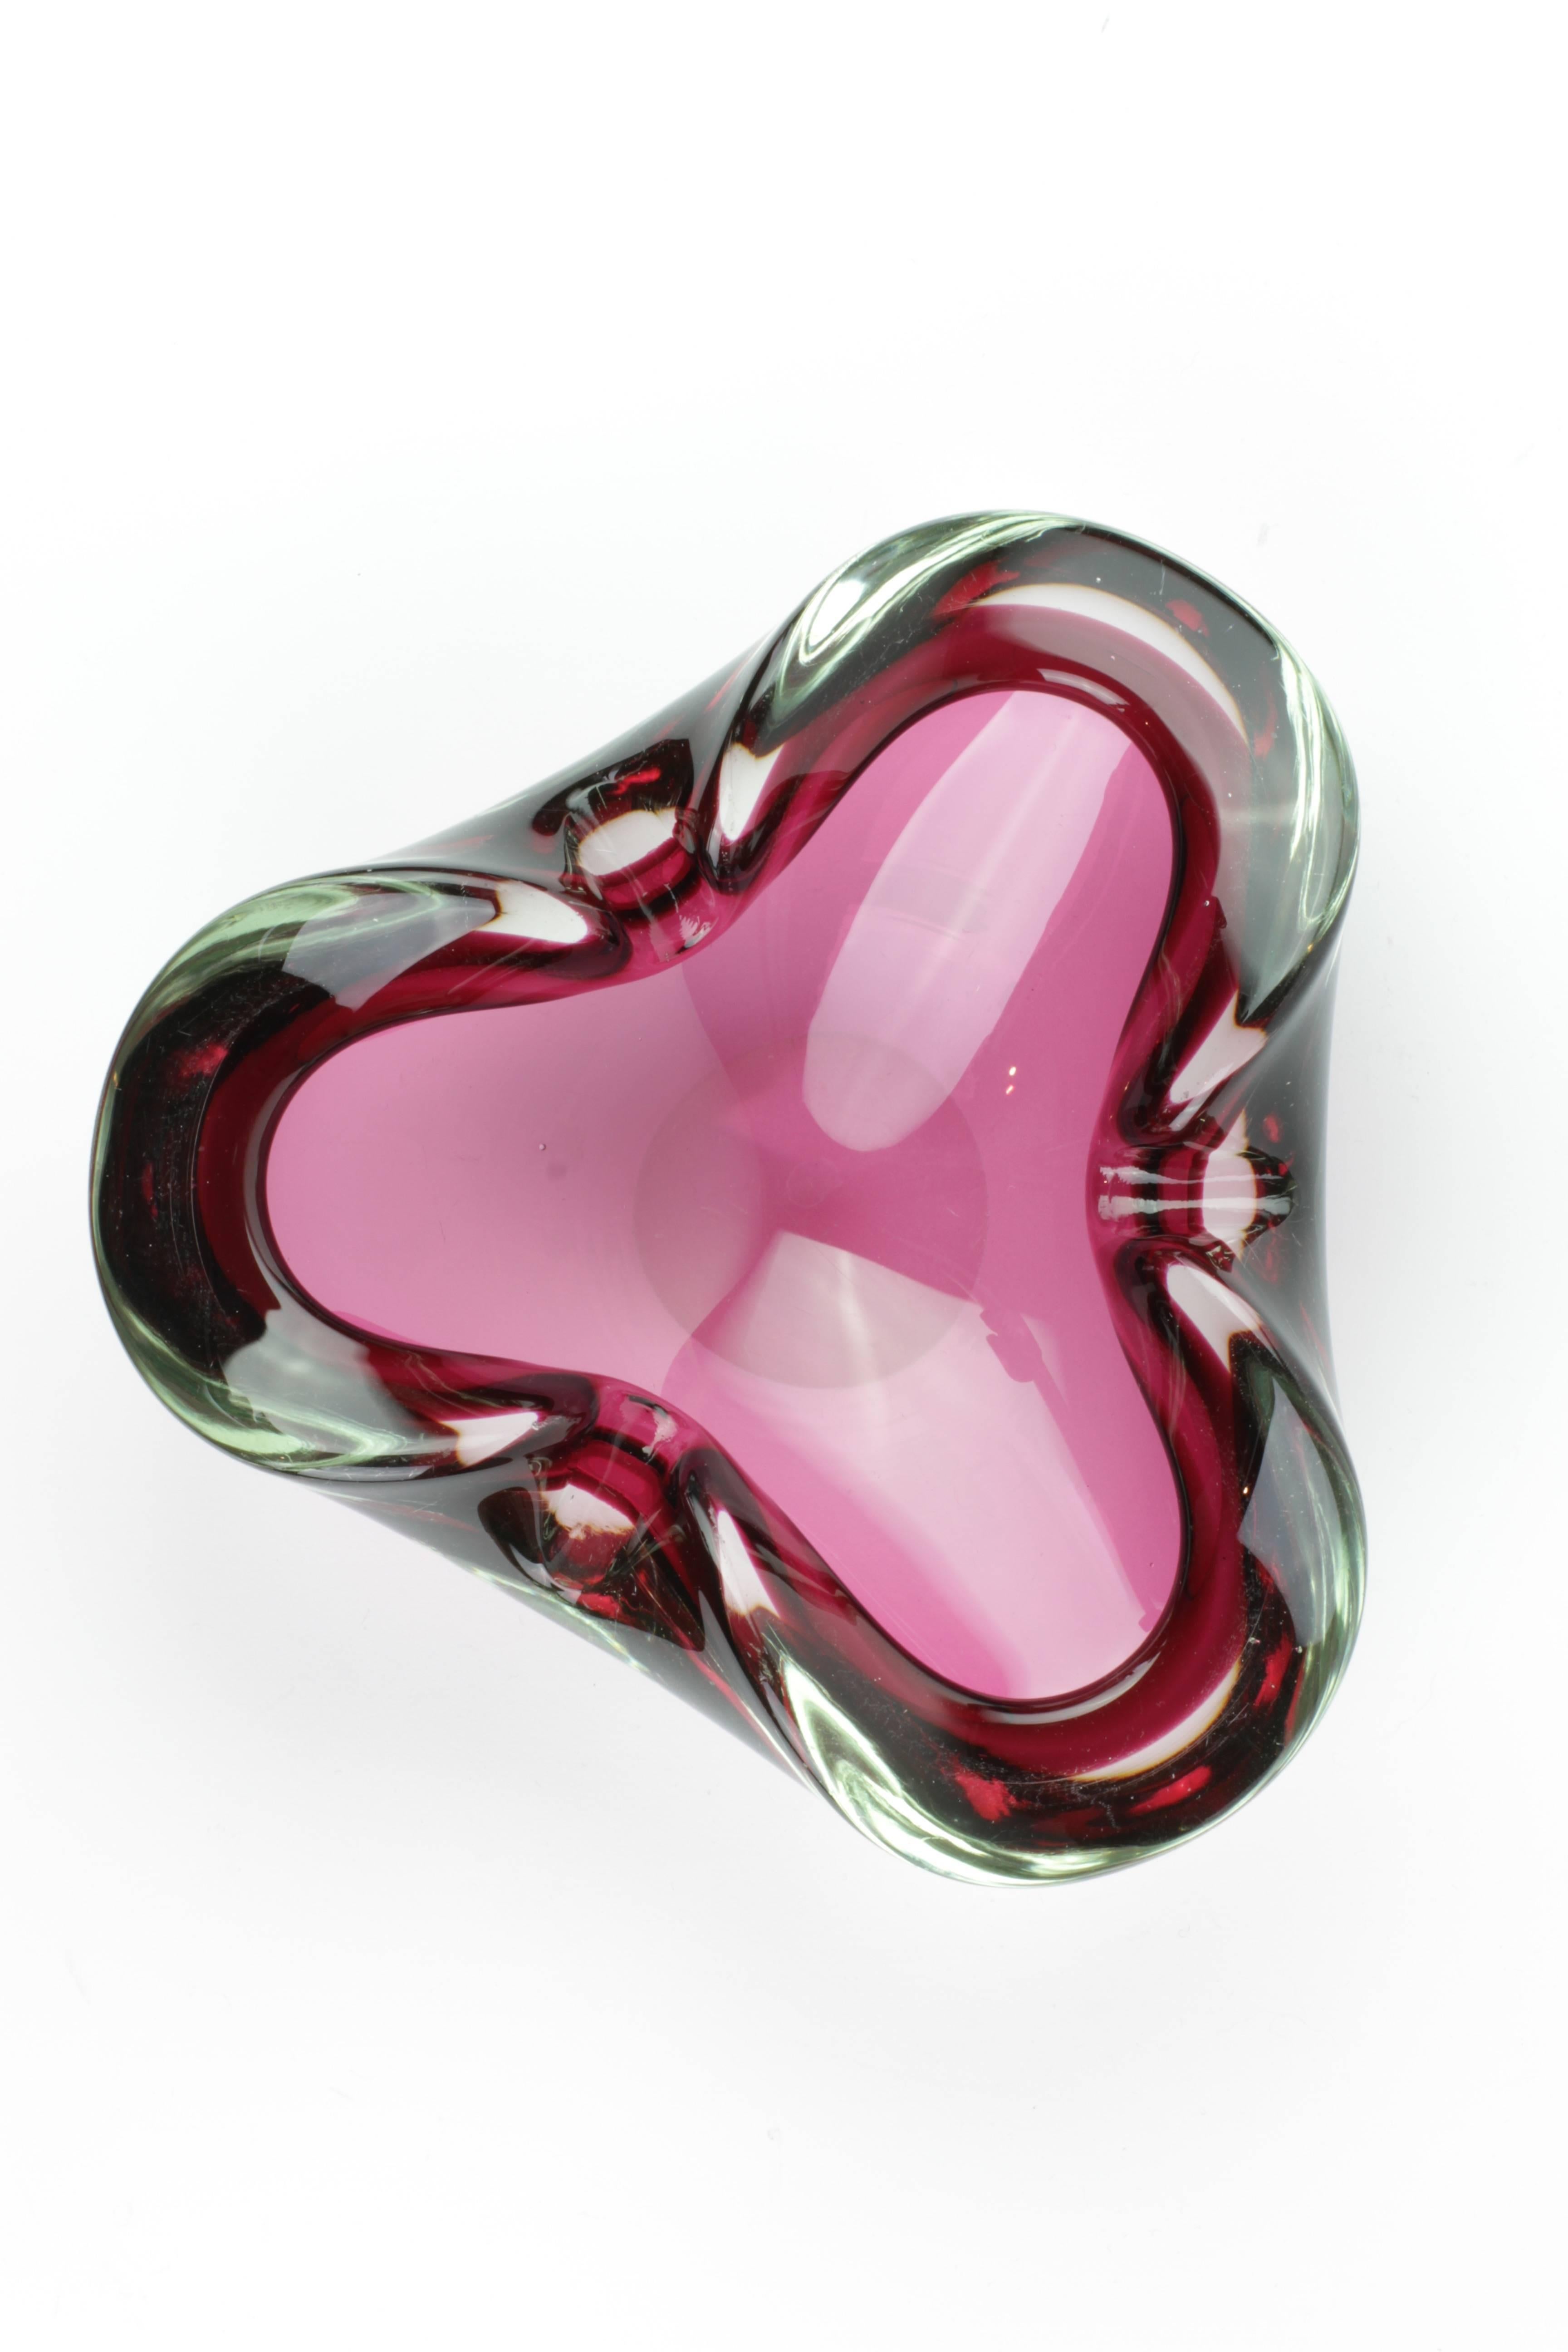 Blown Glass Pink Biomorphic Triangular Murano Glass Bowl or Ashtray Attributed to Cenedese